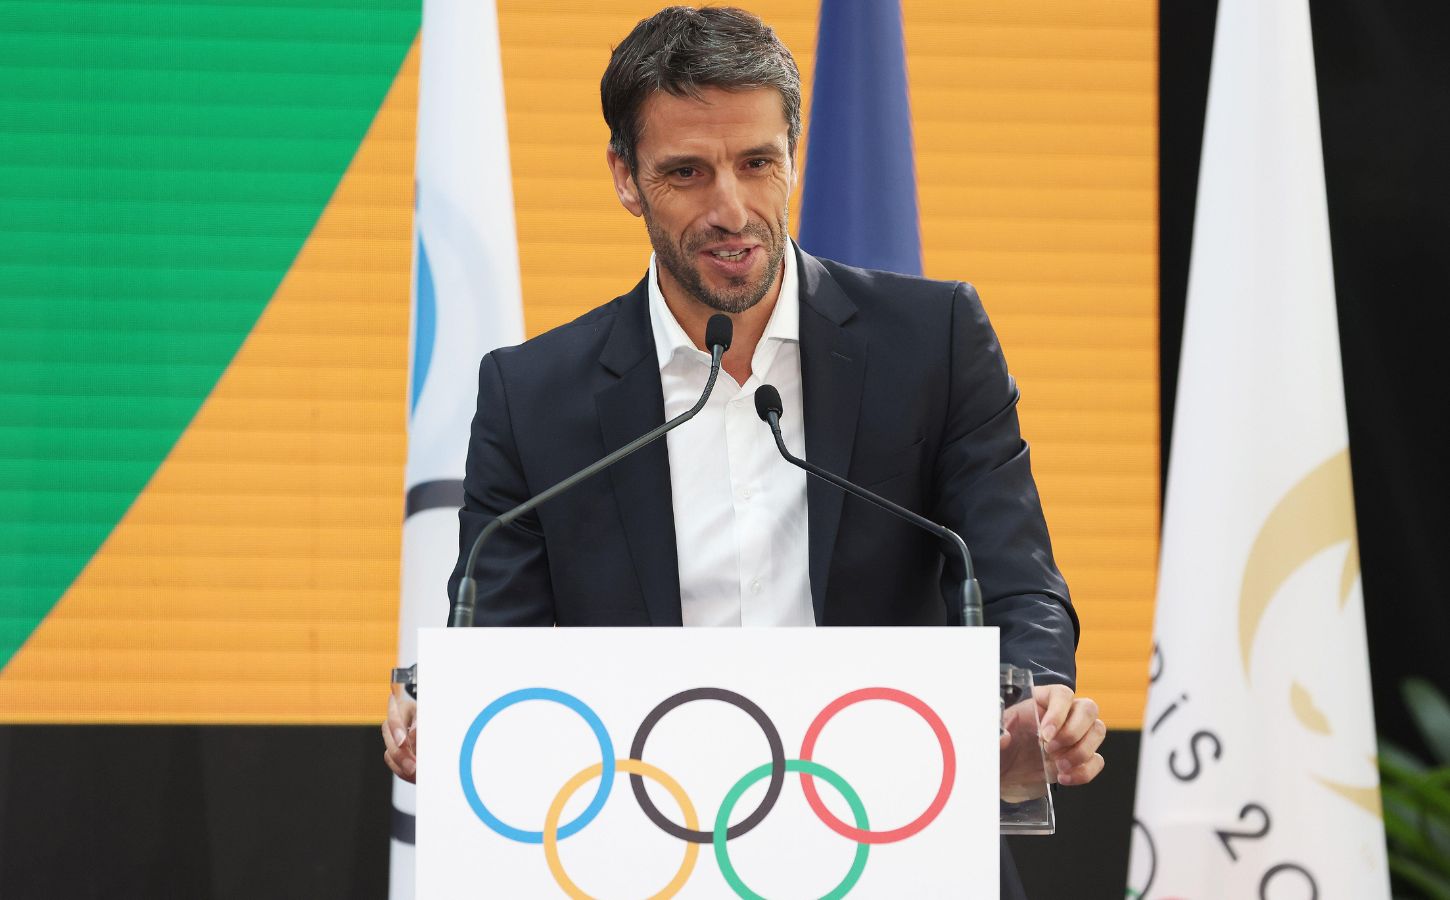 Tony Estanguet, the organizer of the Paris 2024 Olympic Games